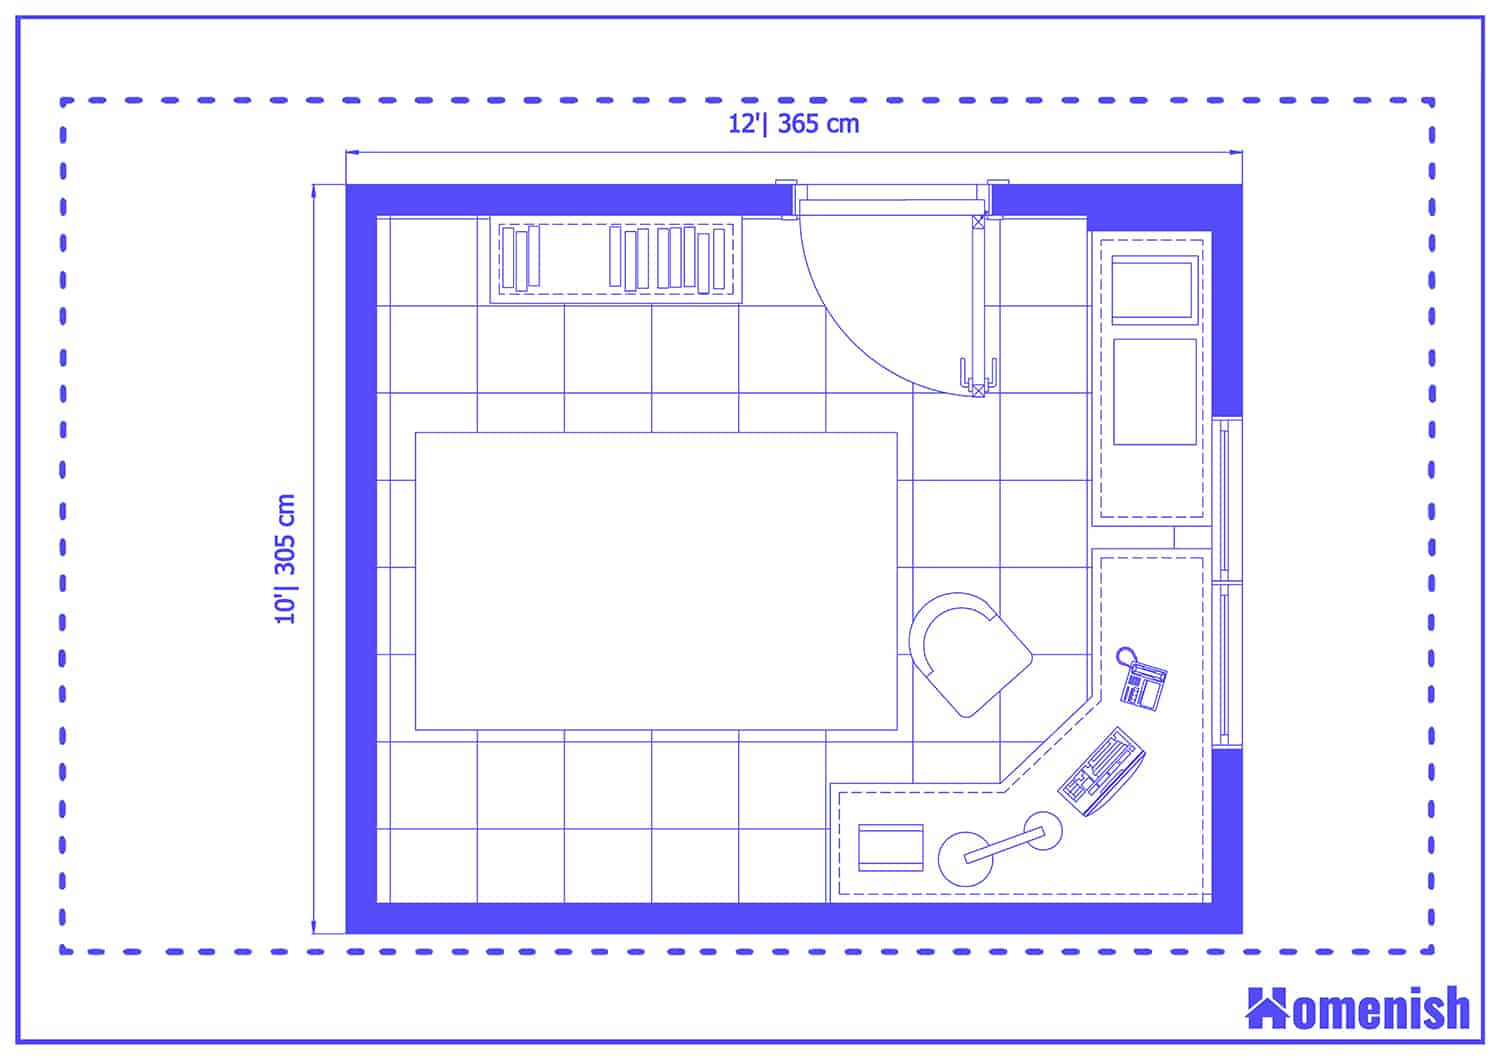 Simple Home Office Layout Floor Plan